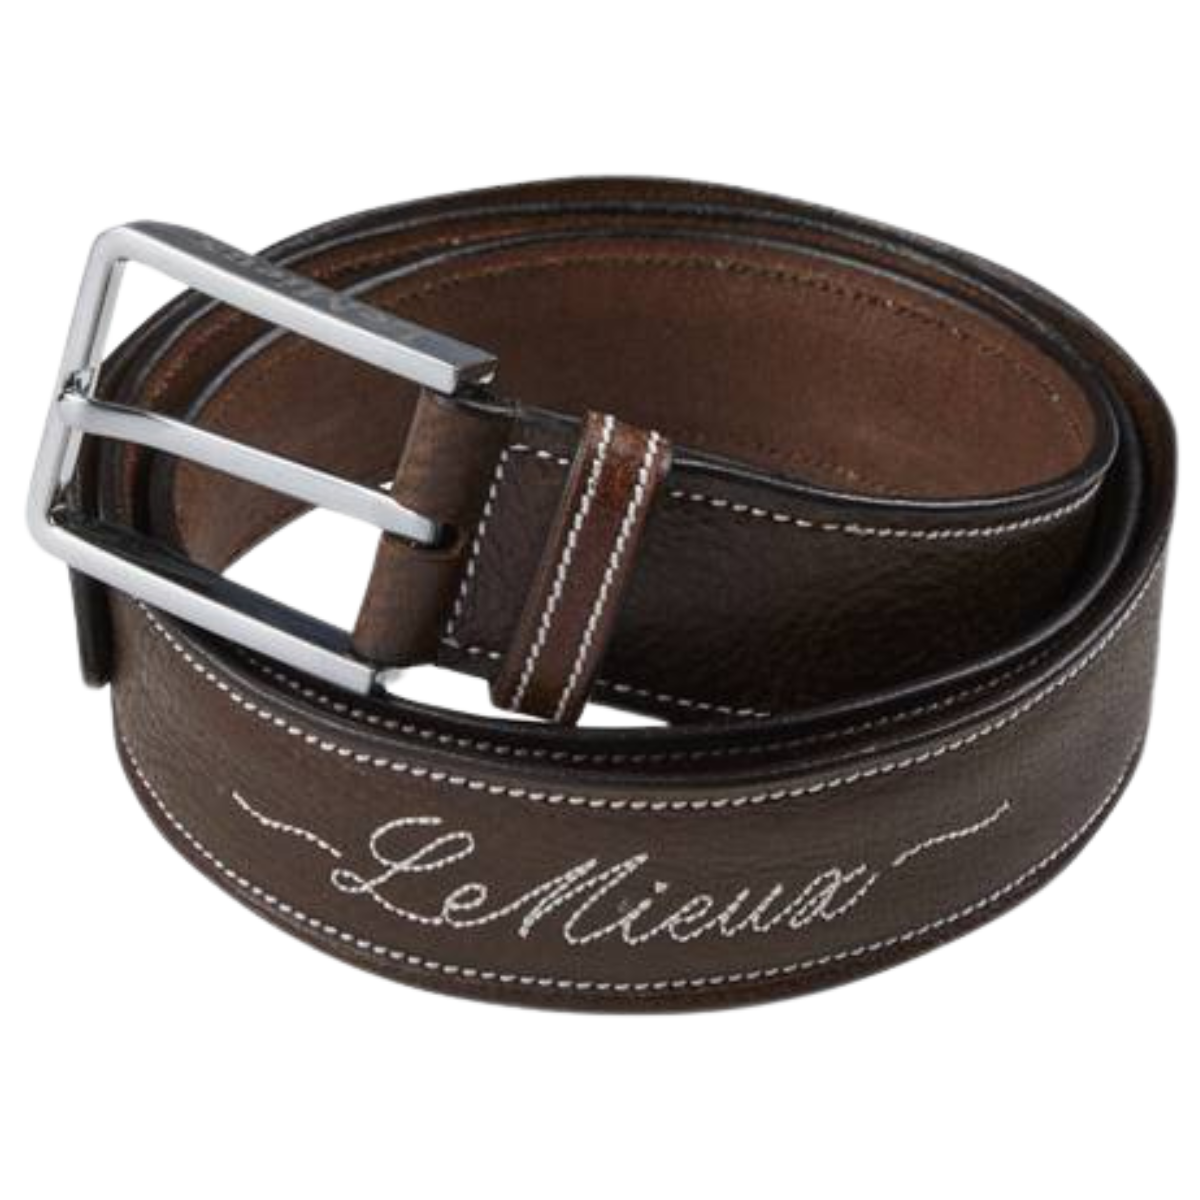 LeMieux 'Signature' Leather Belt in Brown